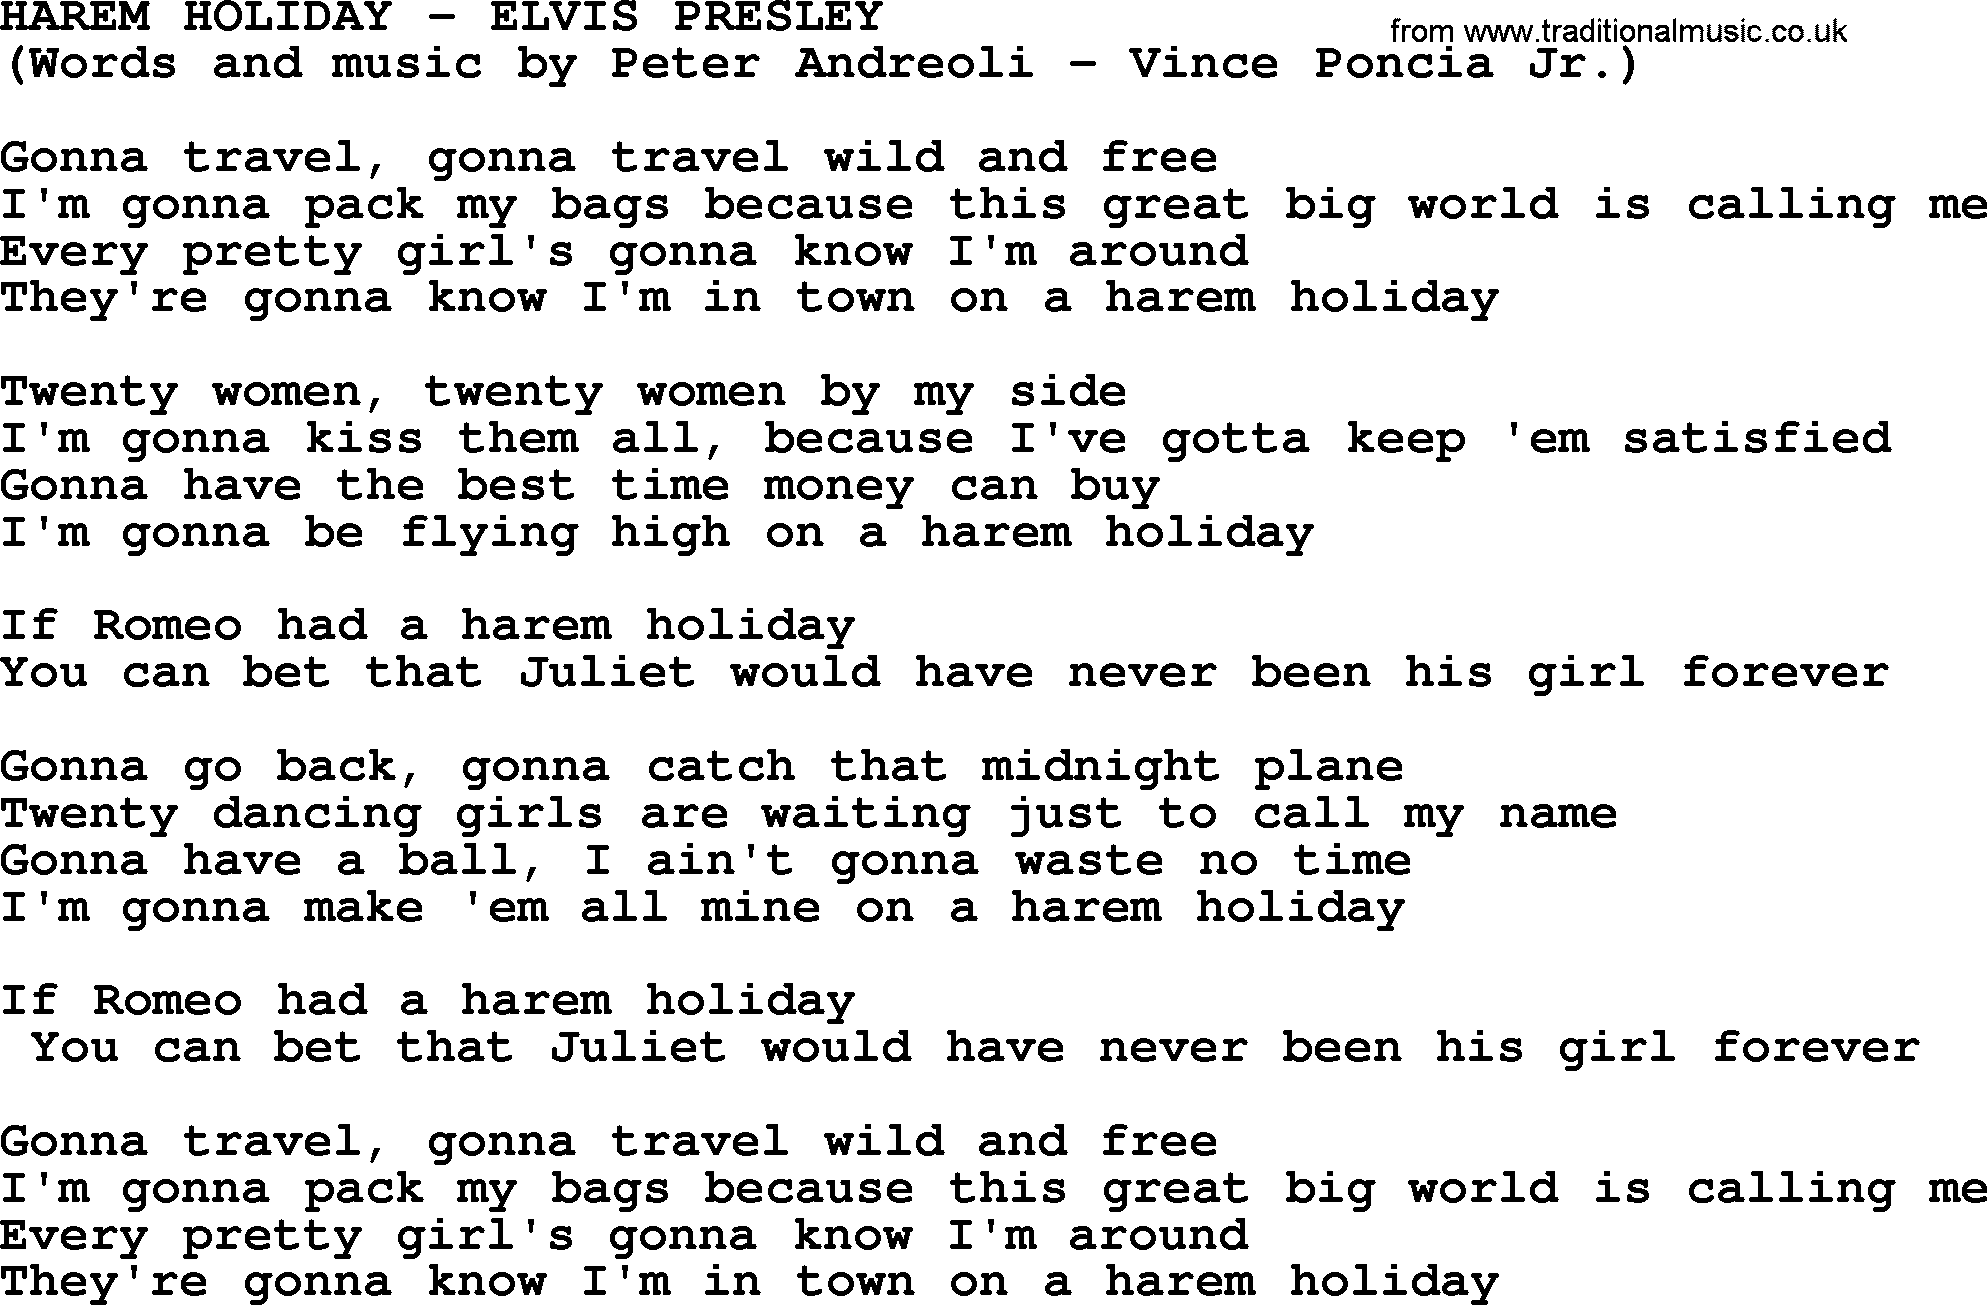 Elvis Presley song: Harem Holiday lyrics